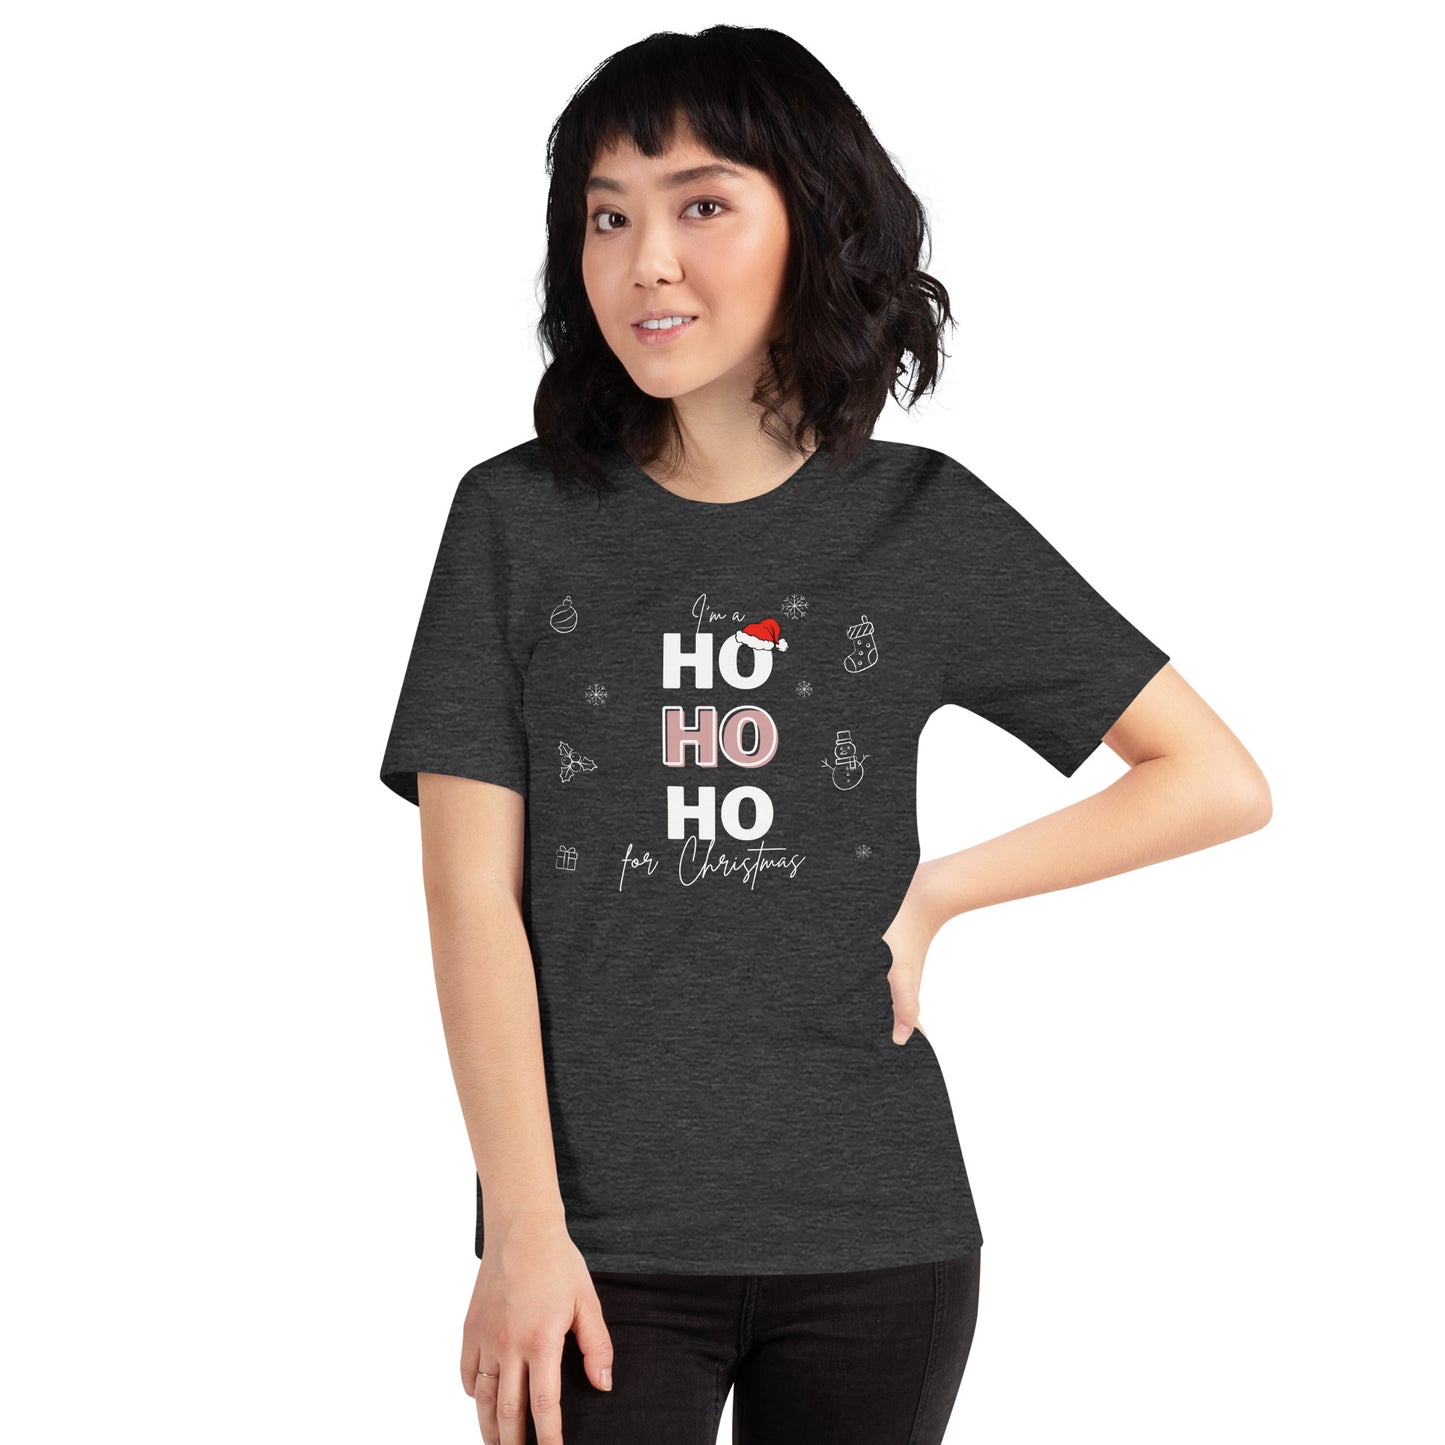 I'm a HO HO HO For Christmas - White